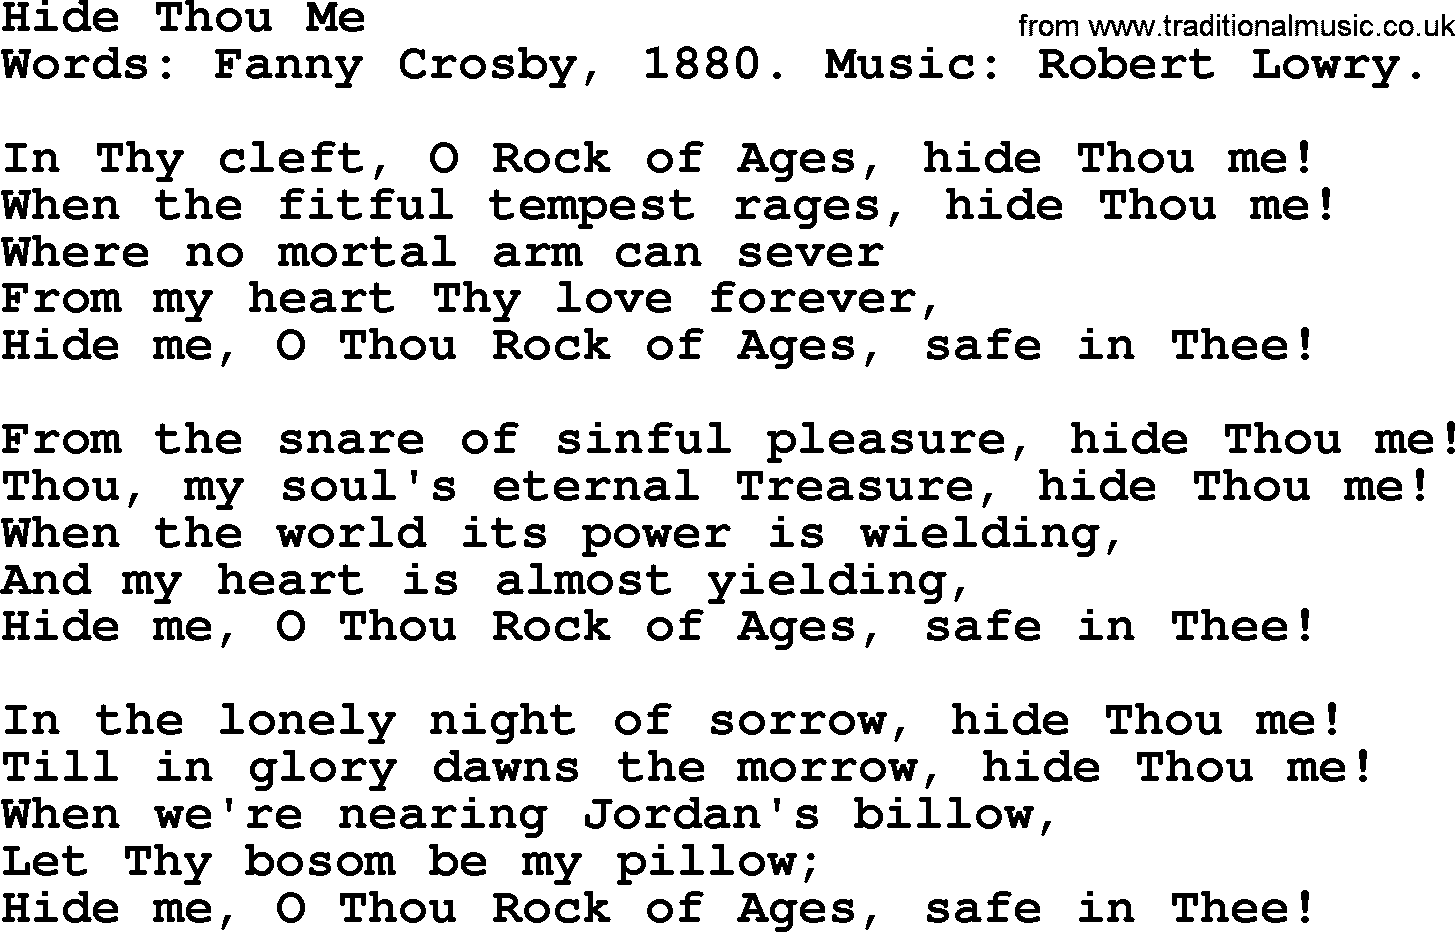 Fanny Crosby song: Hide Thou Me, lyrics